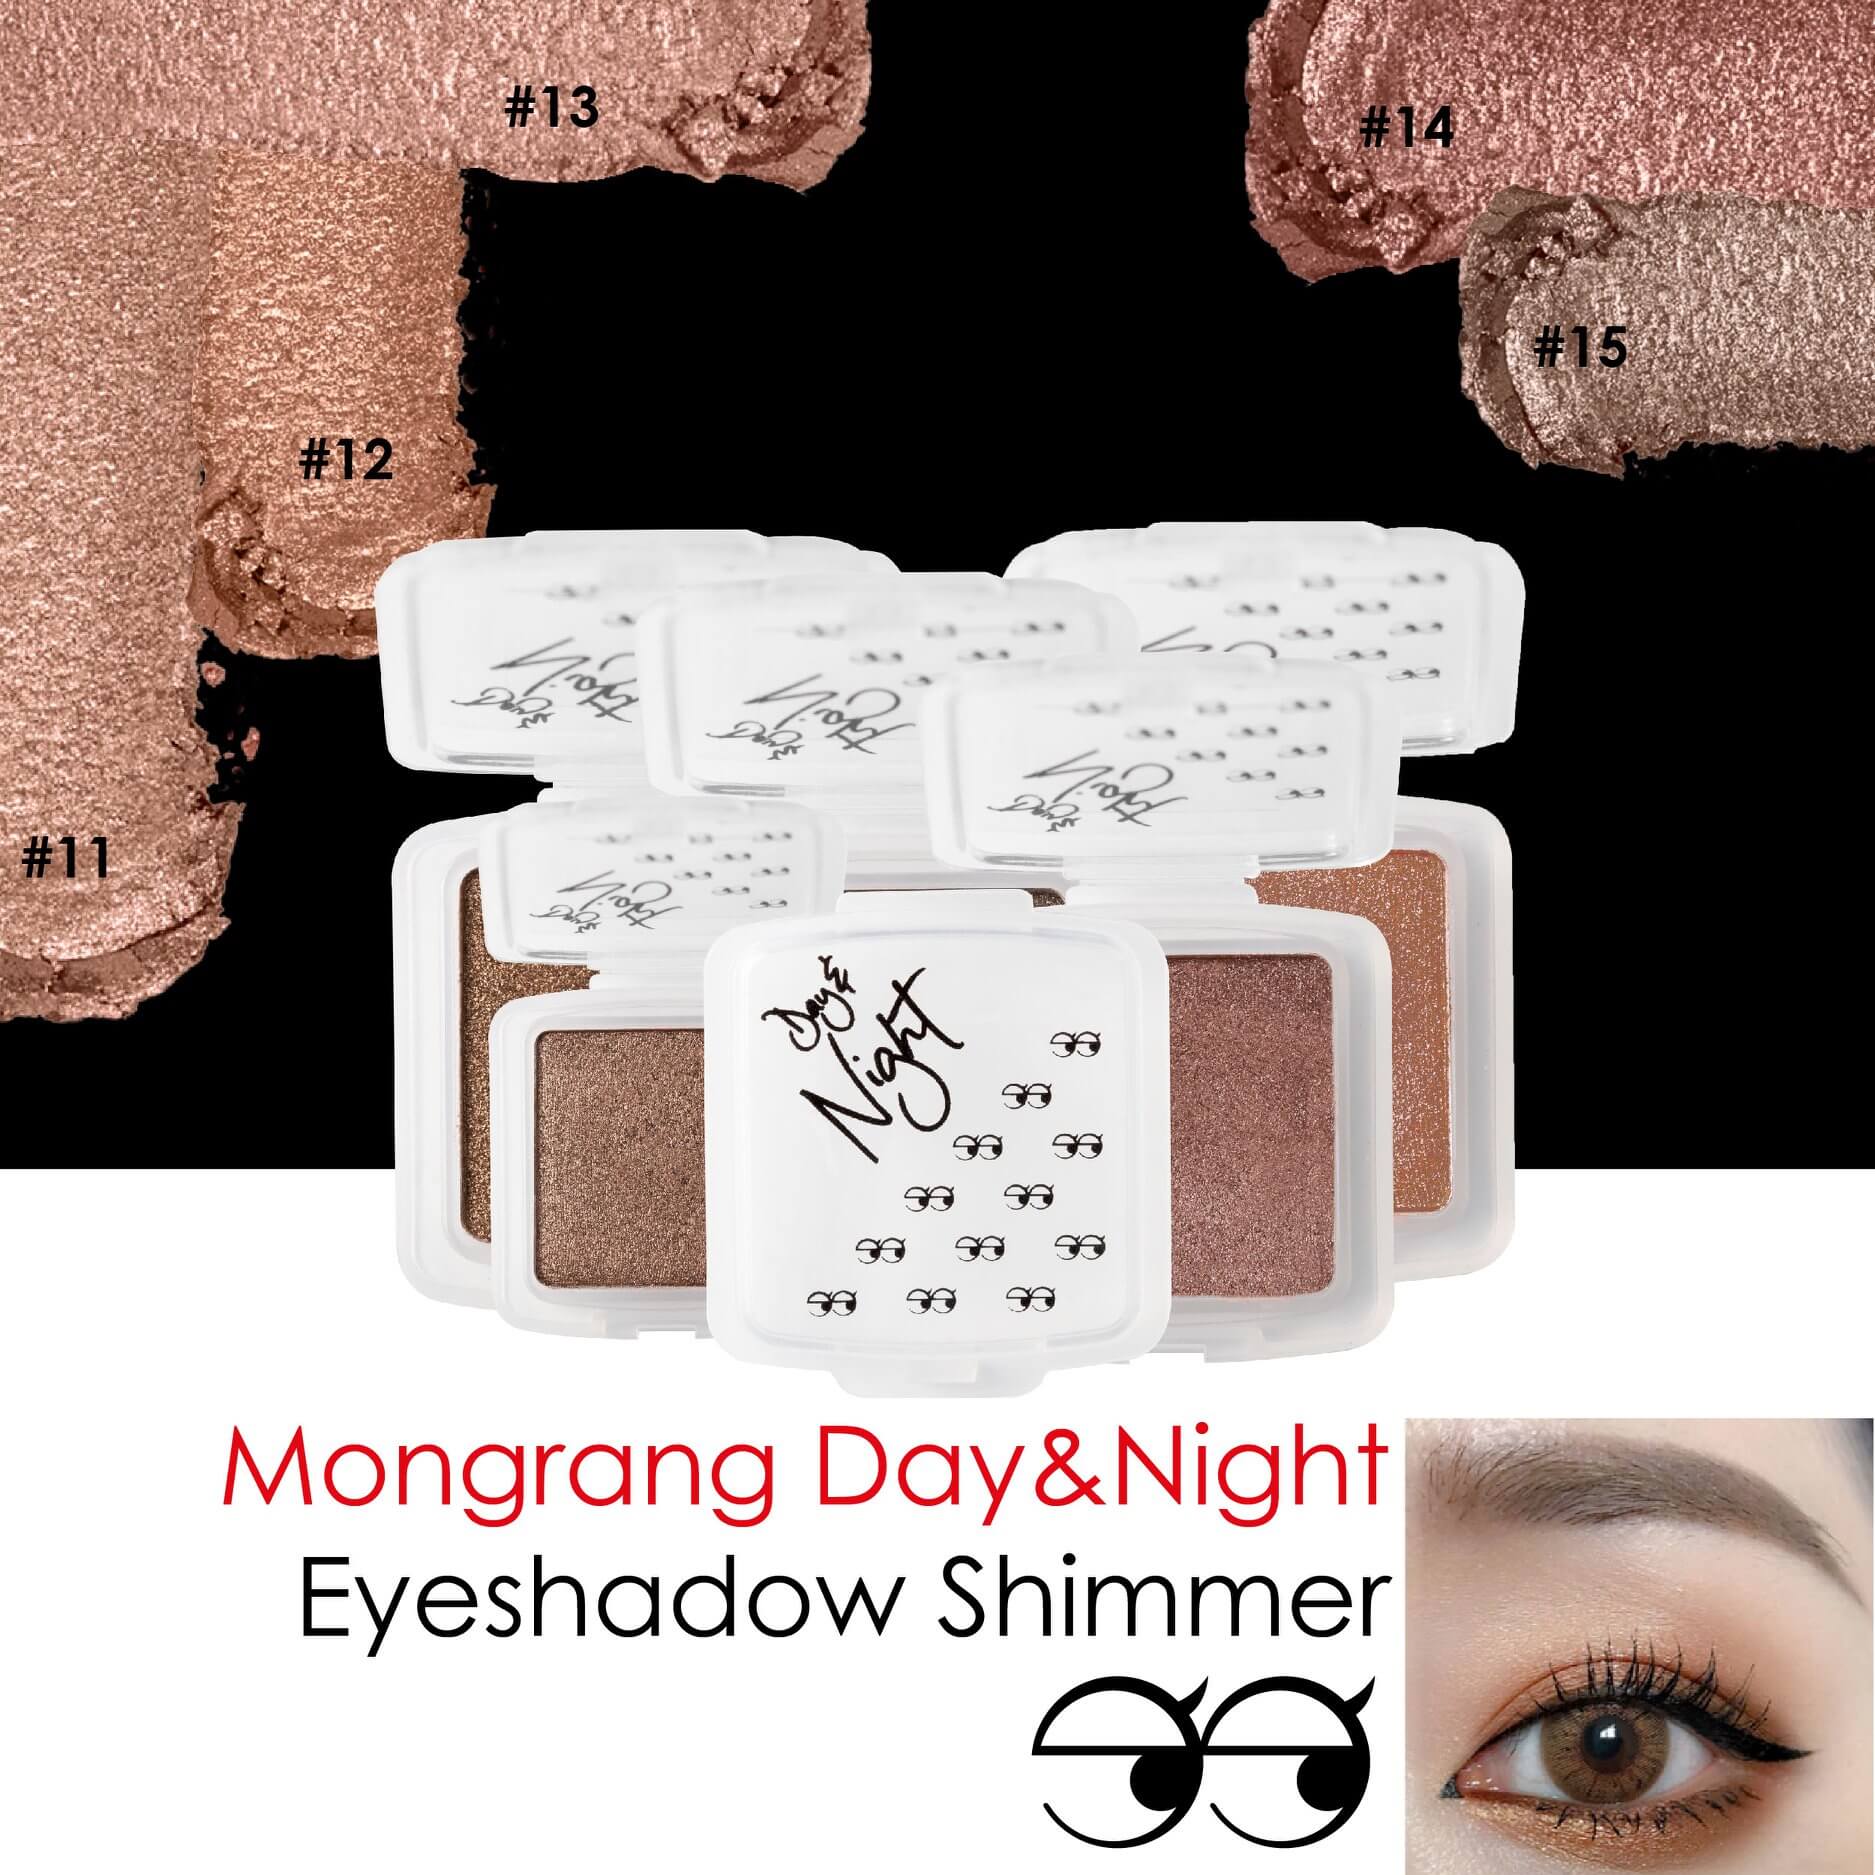  Mongrang Day&Night Eyeshadow Shimmer อายแชโดว์ชิมเมอร์โทนสีน้ำตาลธรรมชาติ โทนนที่แต่งได้ทุกวัน ให้ดวงตาคู่สวยเปล่งปลั่งระยิบระยับ